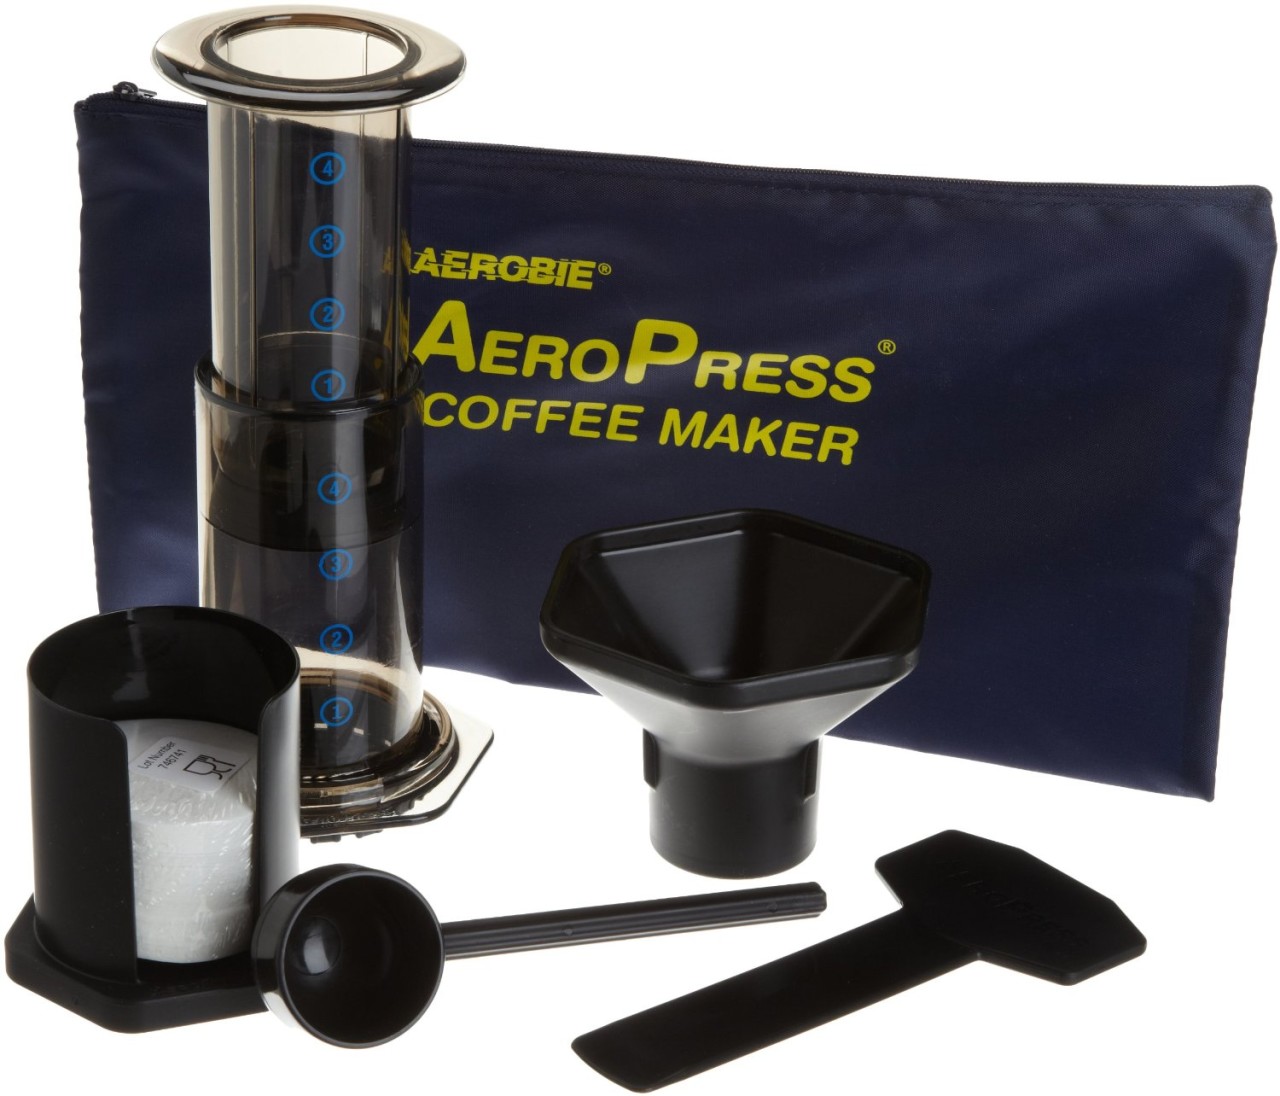 https://snarkynomad.com/wp-content/uploads/2015/04/Aeropress-Portable-Coffee-Maker-Travel-Kit.jpg